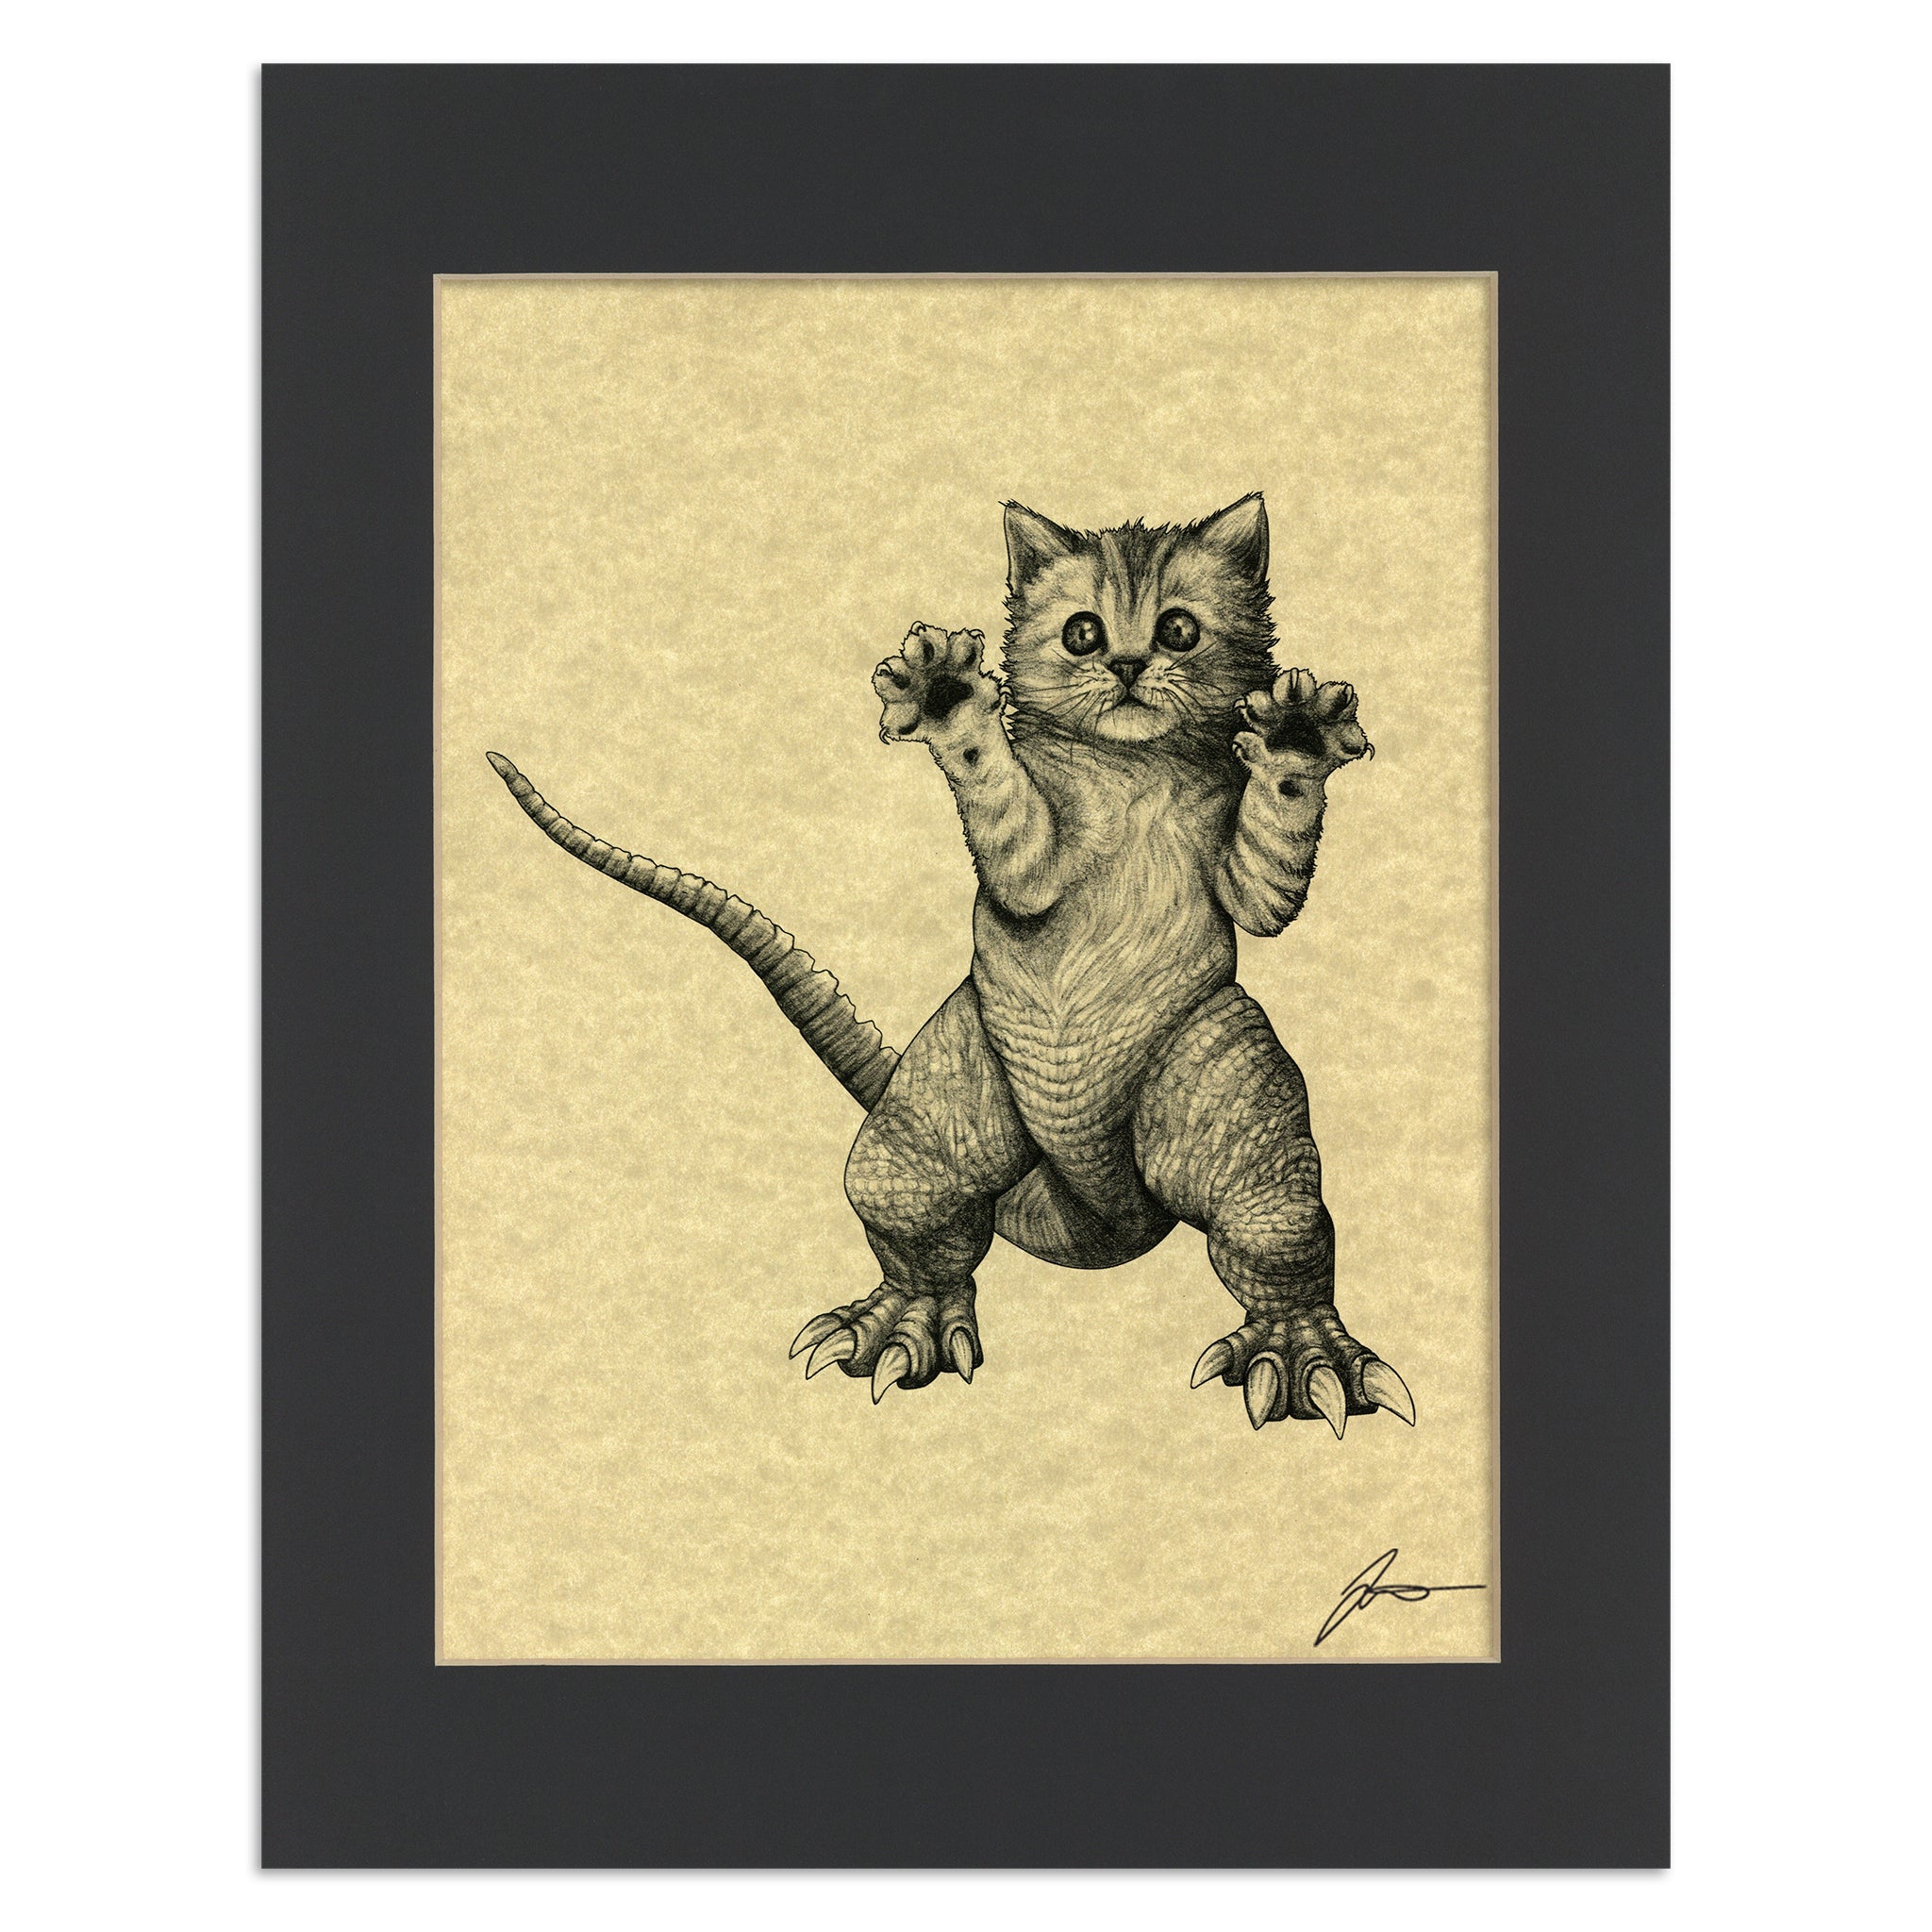 Pawzilla | Cat + Godzilla Hybrid Animal | 11x14" Parchment Print